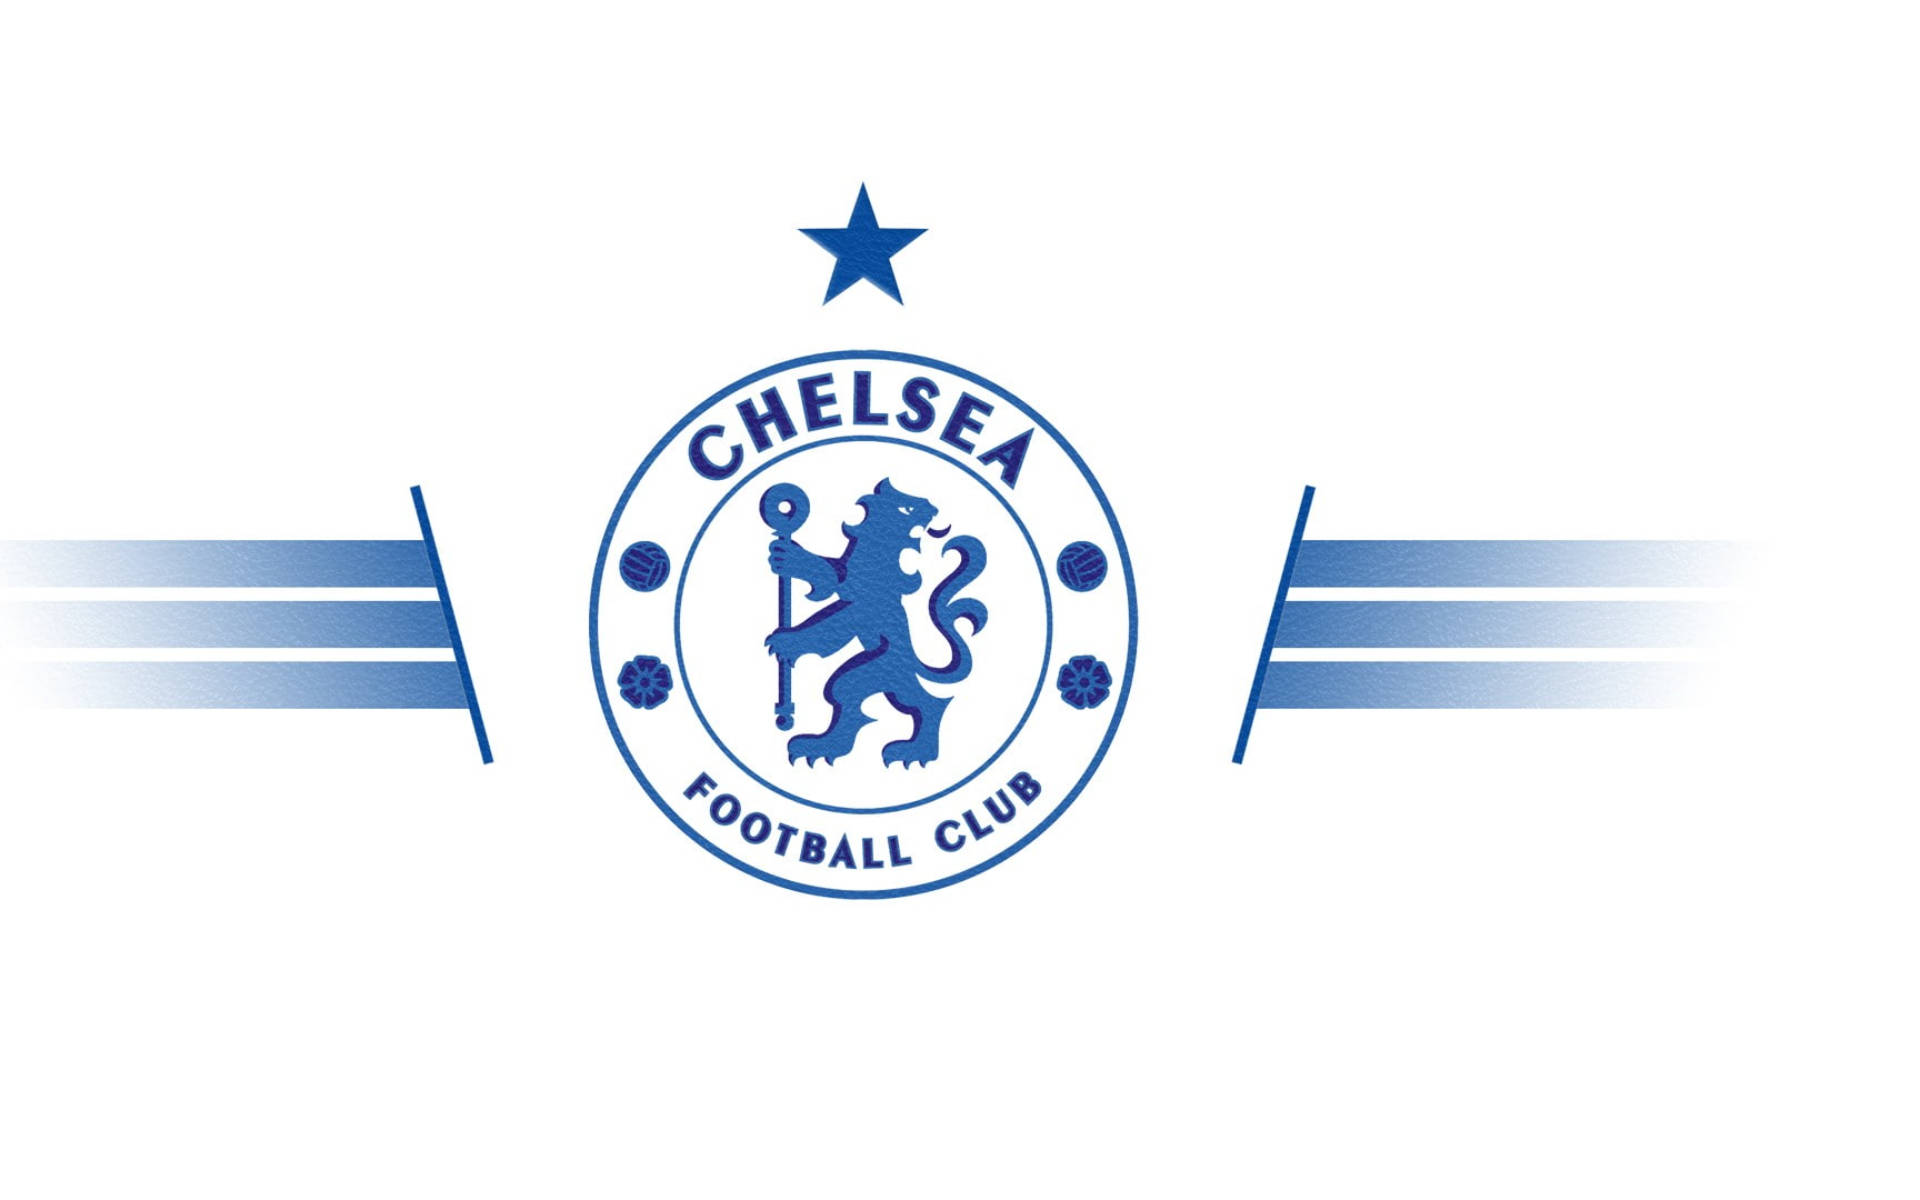 Chelsea Emblem In White